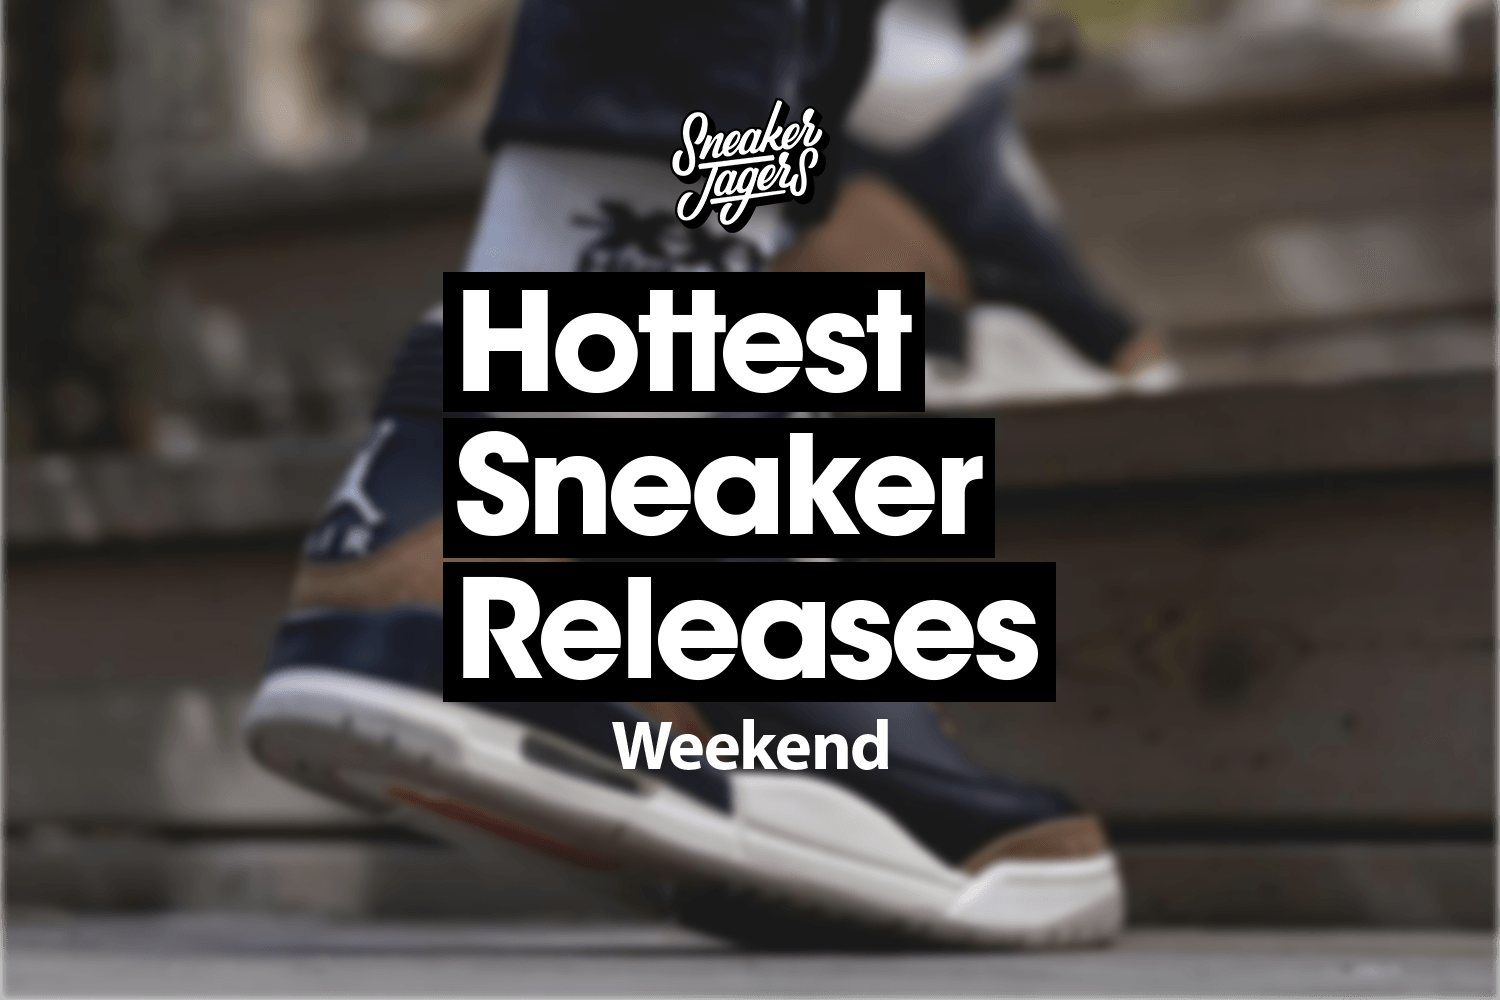 Sneaker Release Reminder ⏰ Juli Wochenende 30